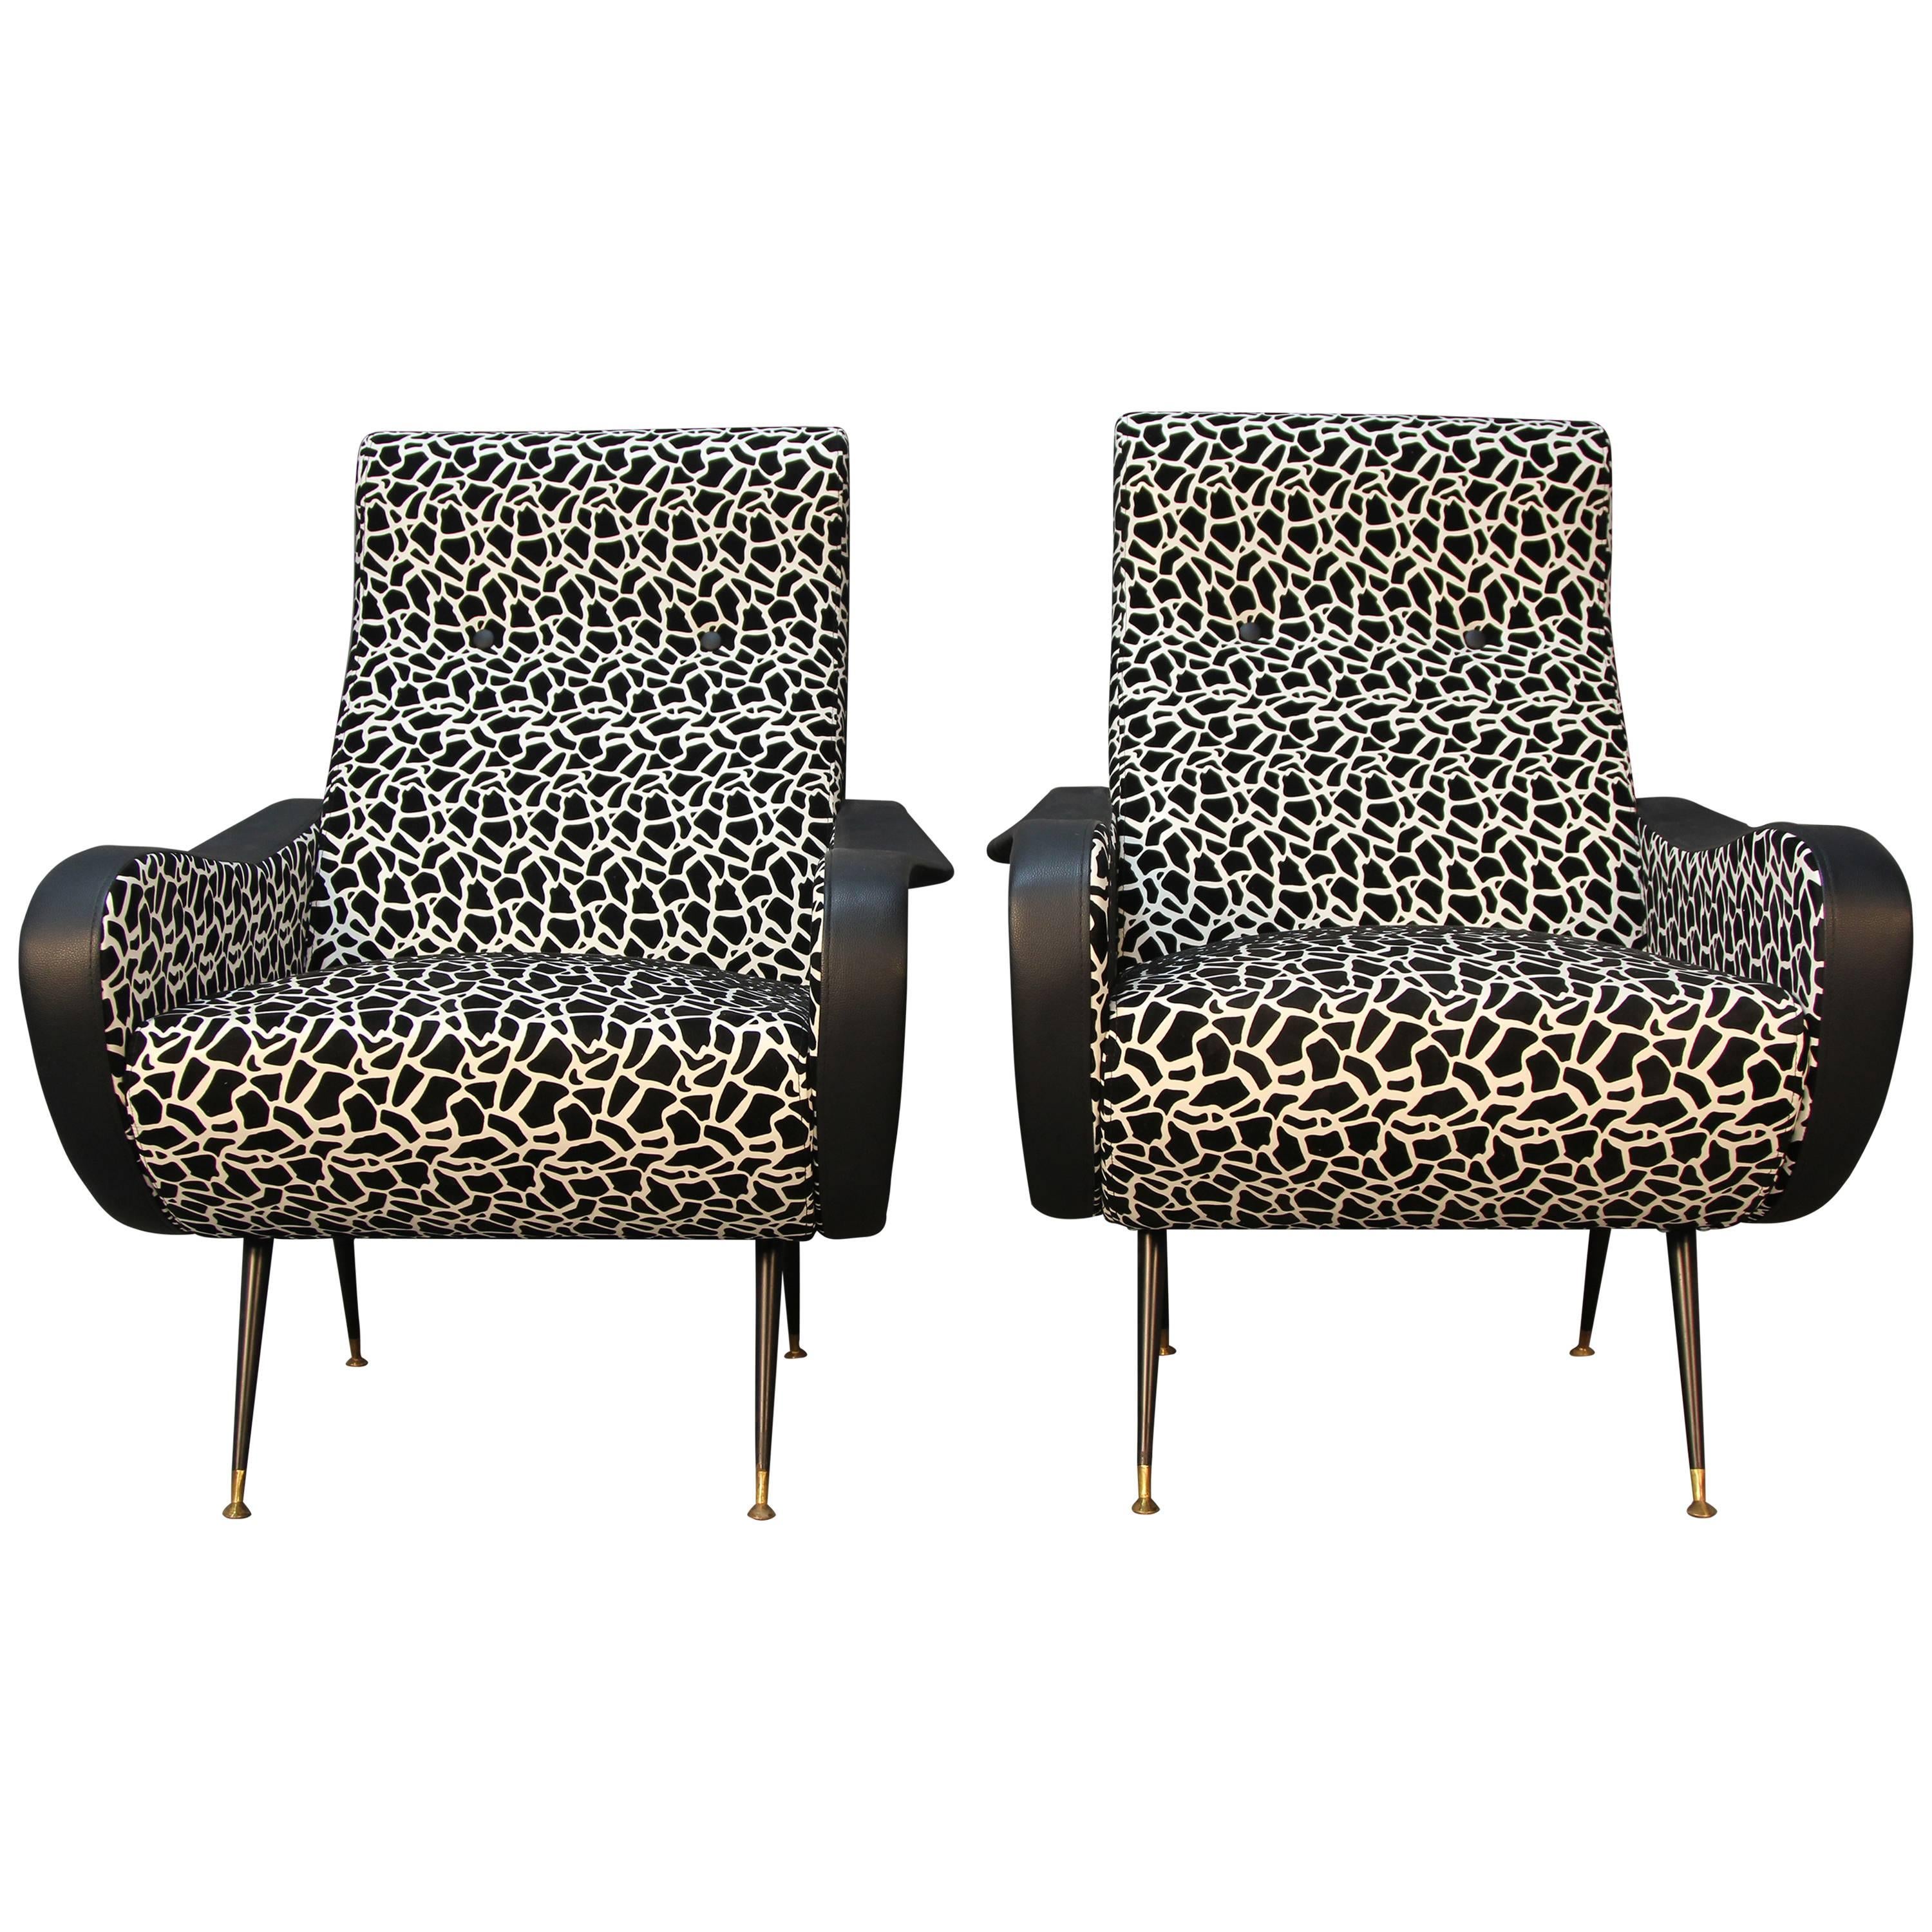 Pair of Italian Modern Mid-Century Lounge Chairs